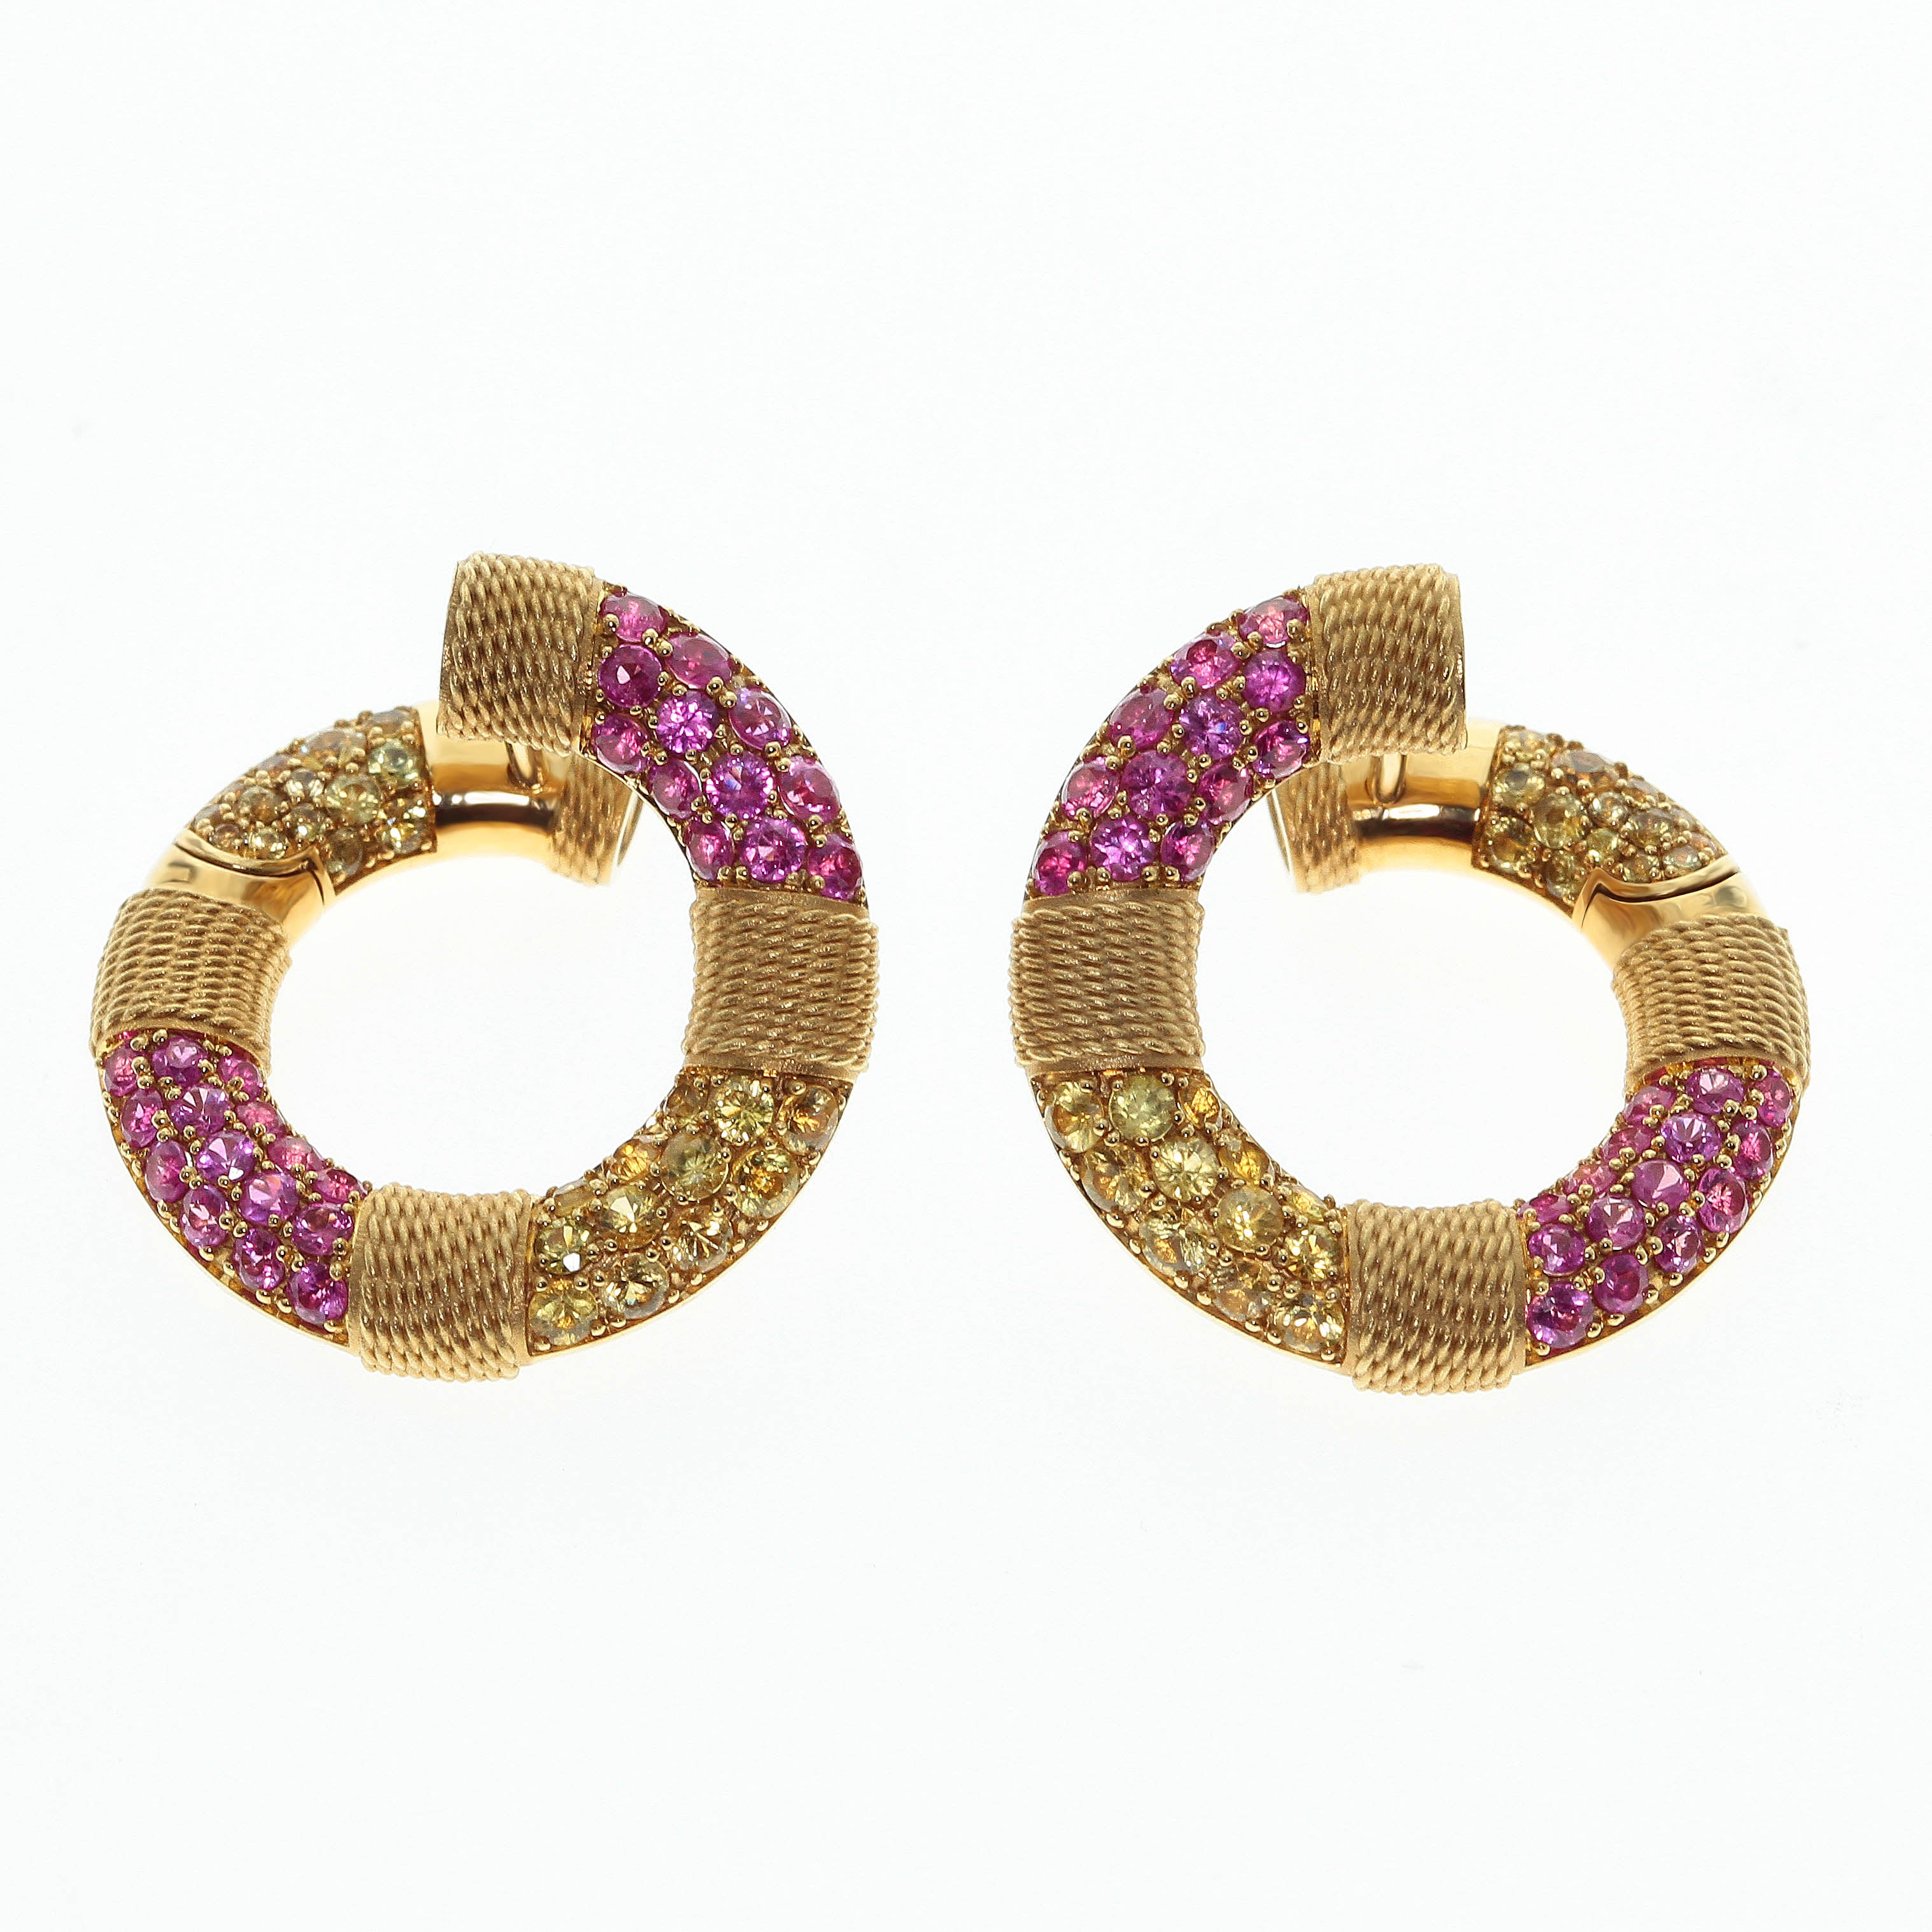 E 0293-0, 18K Yellow Gold, Sapphires Lifebuoy Earrings